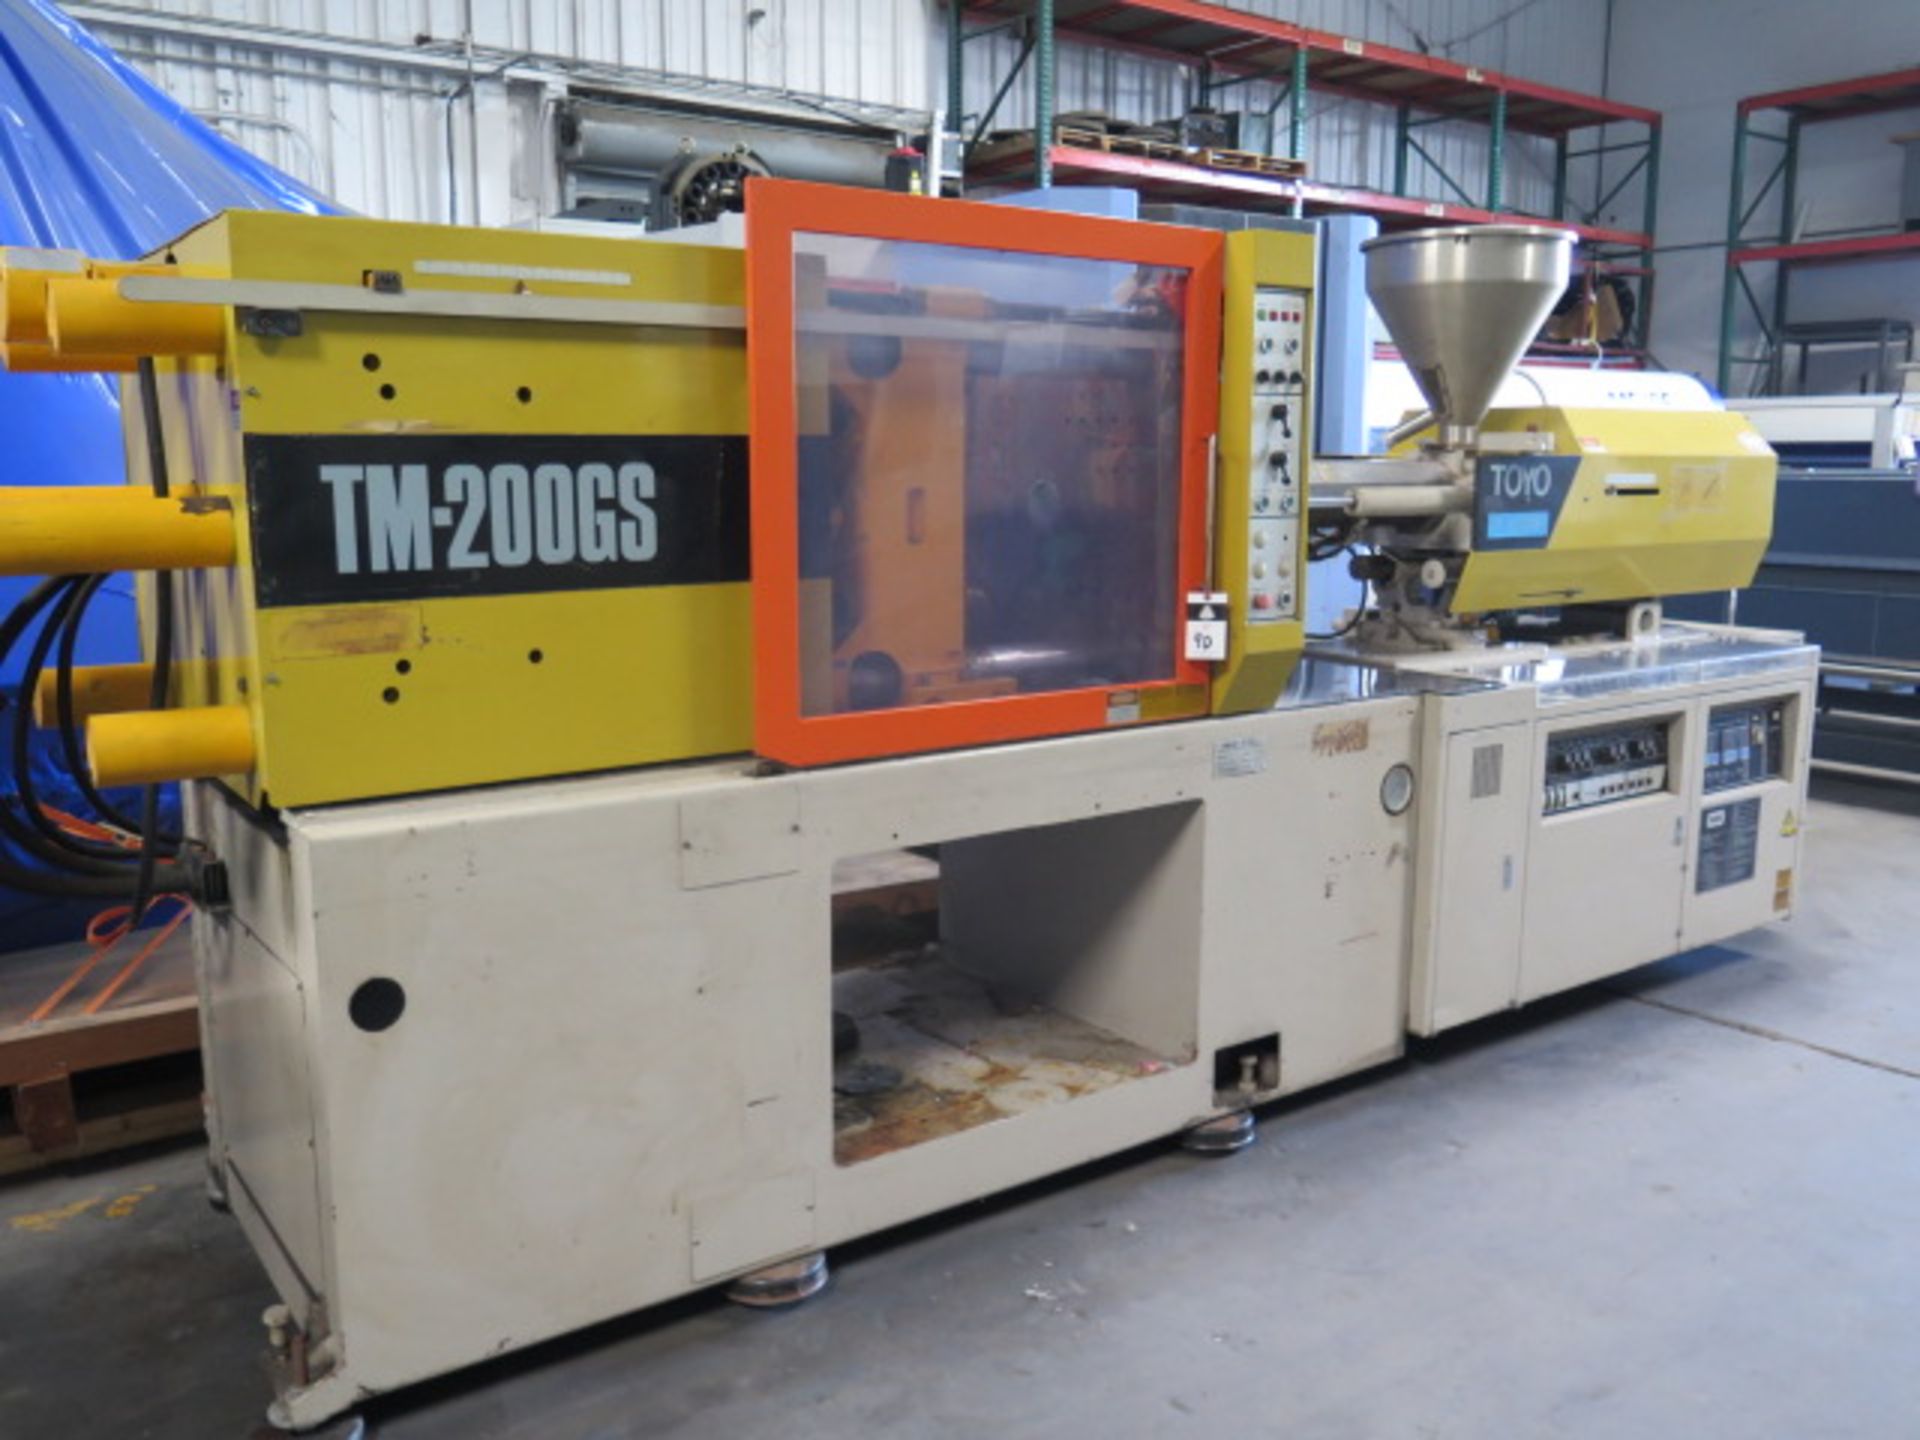 Toyo Machine “Plastar TM-200GS” 200 Ton Plastic Injection Molding Machine s/n 1033033, SOLD AS IS